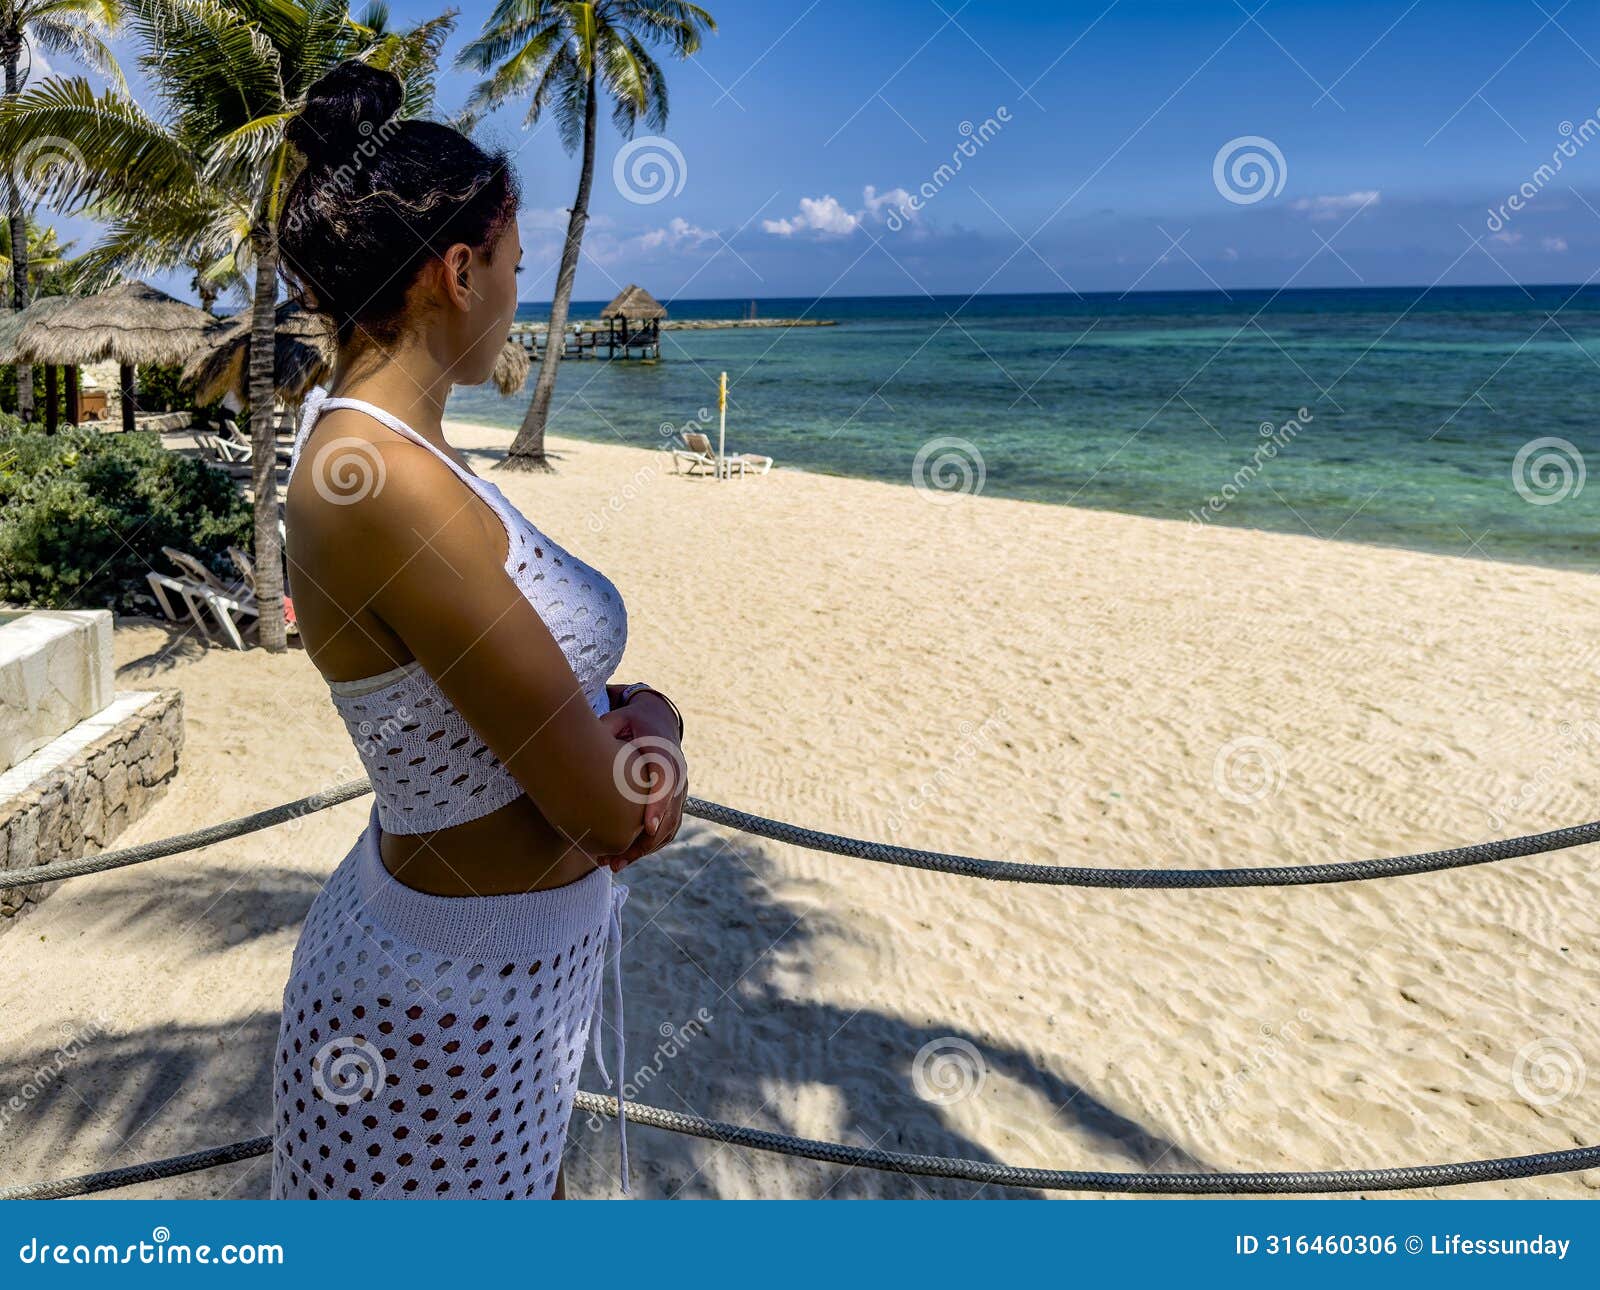 young girl in white sexy clothes contemplating the horizon of a paradisiacal beach